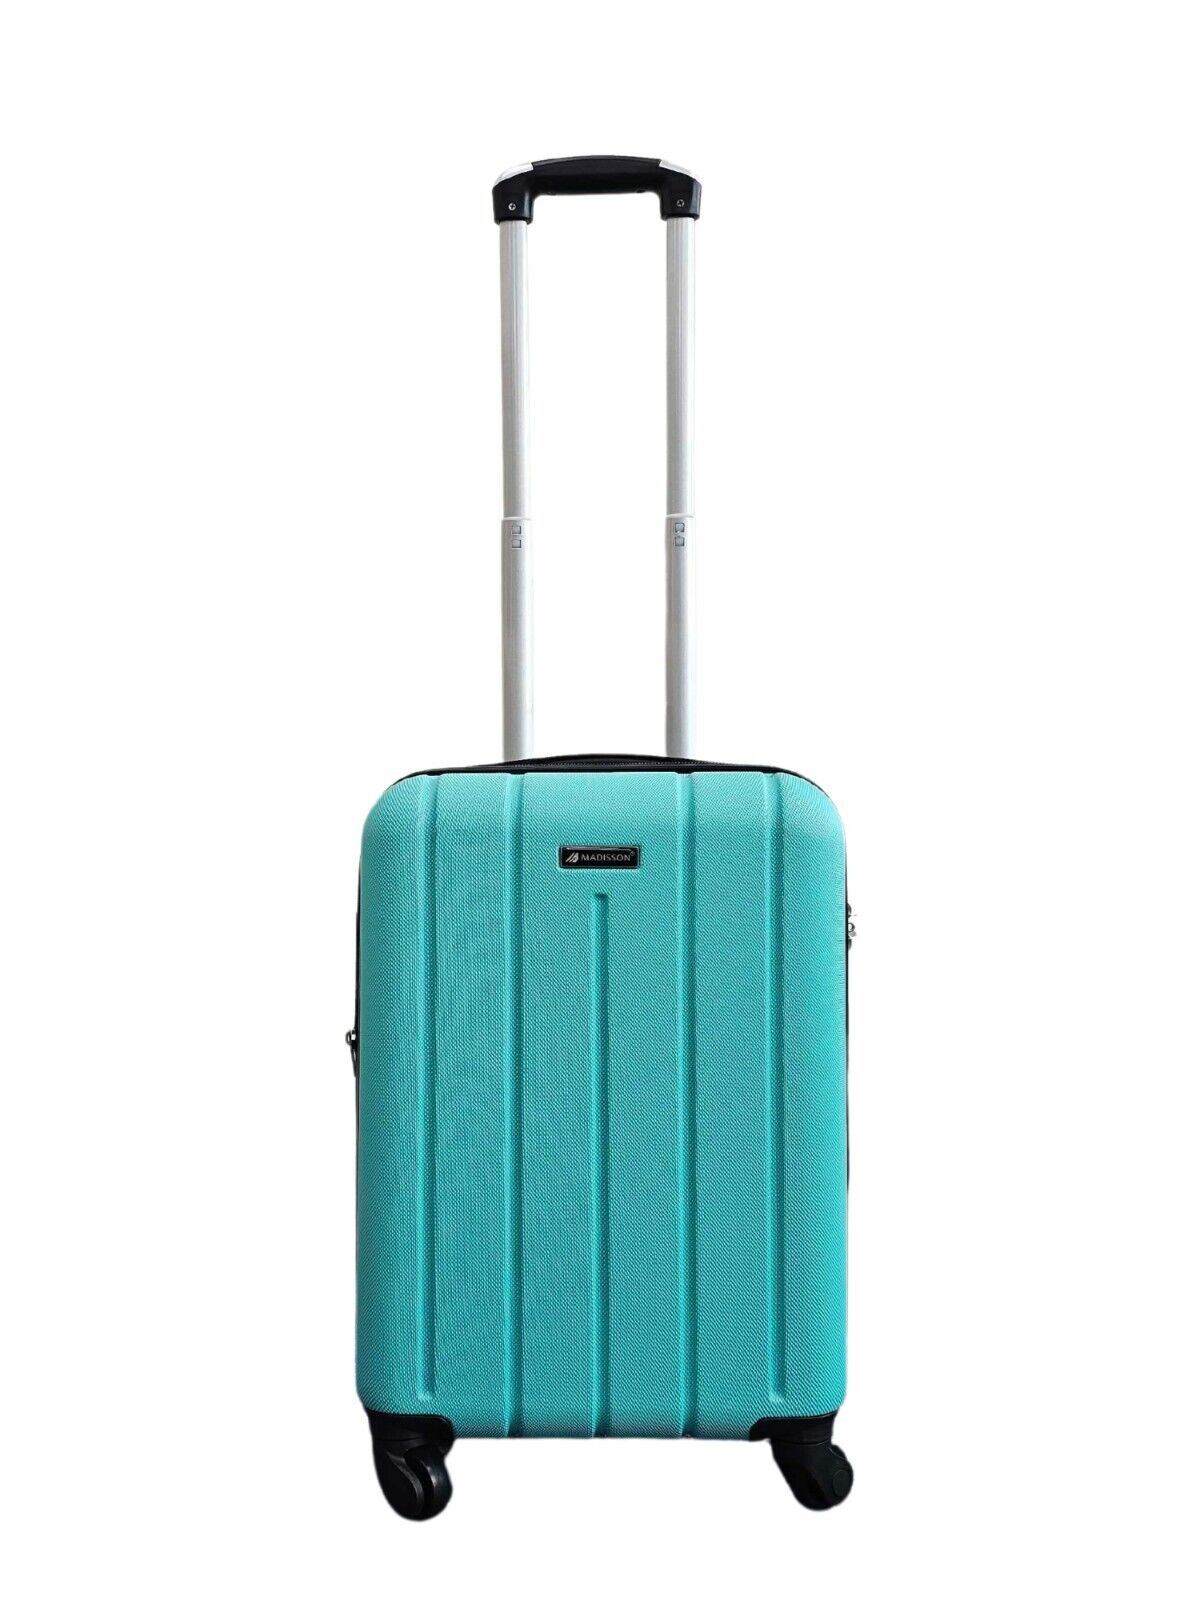 Robust Teal Blue Hard shell Suitcase Set 4 Wheel Lightweight Luggage